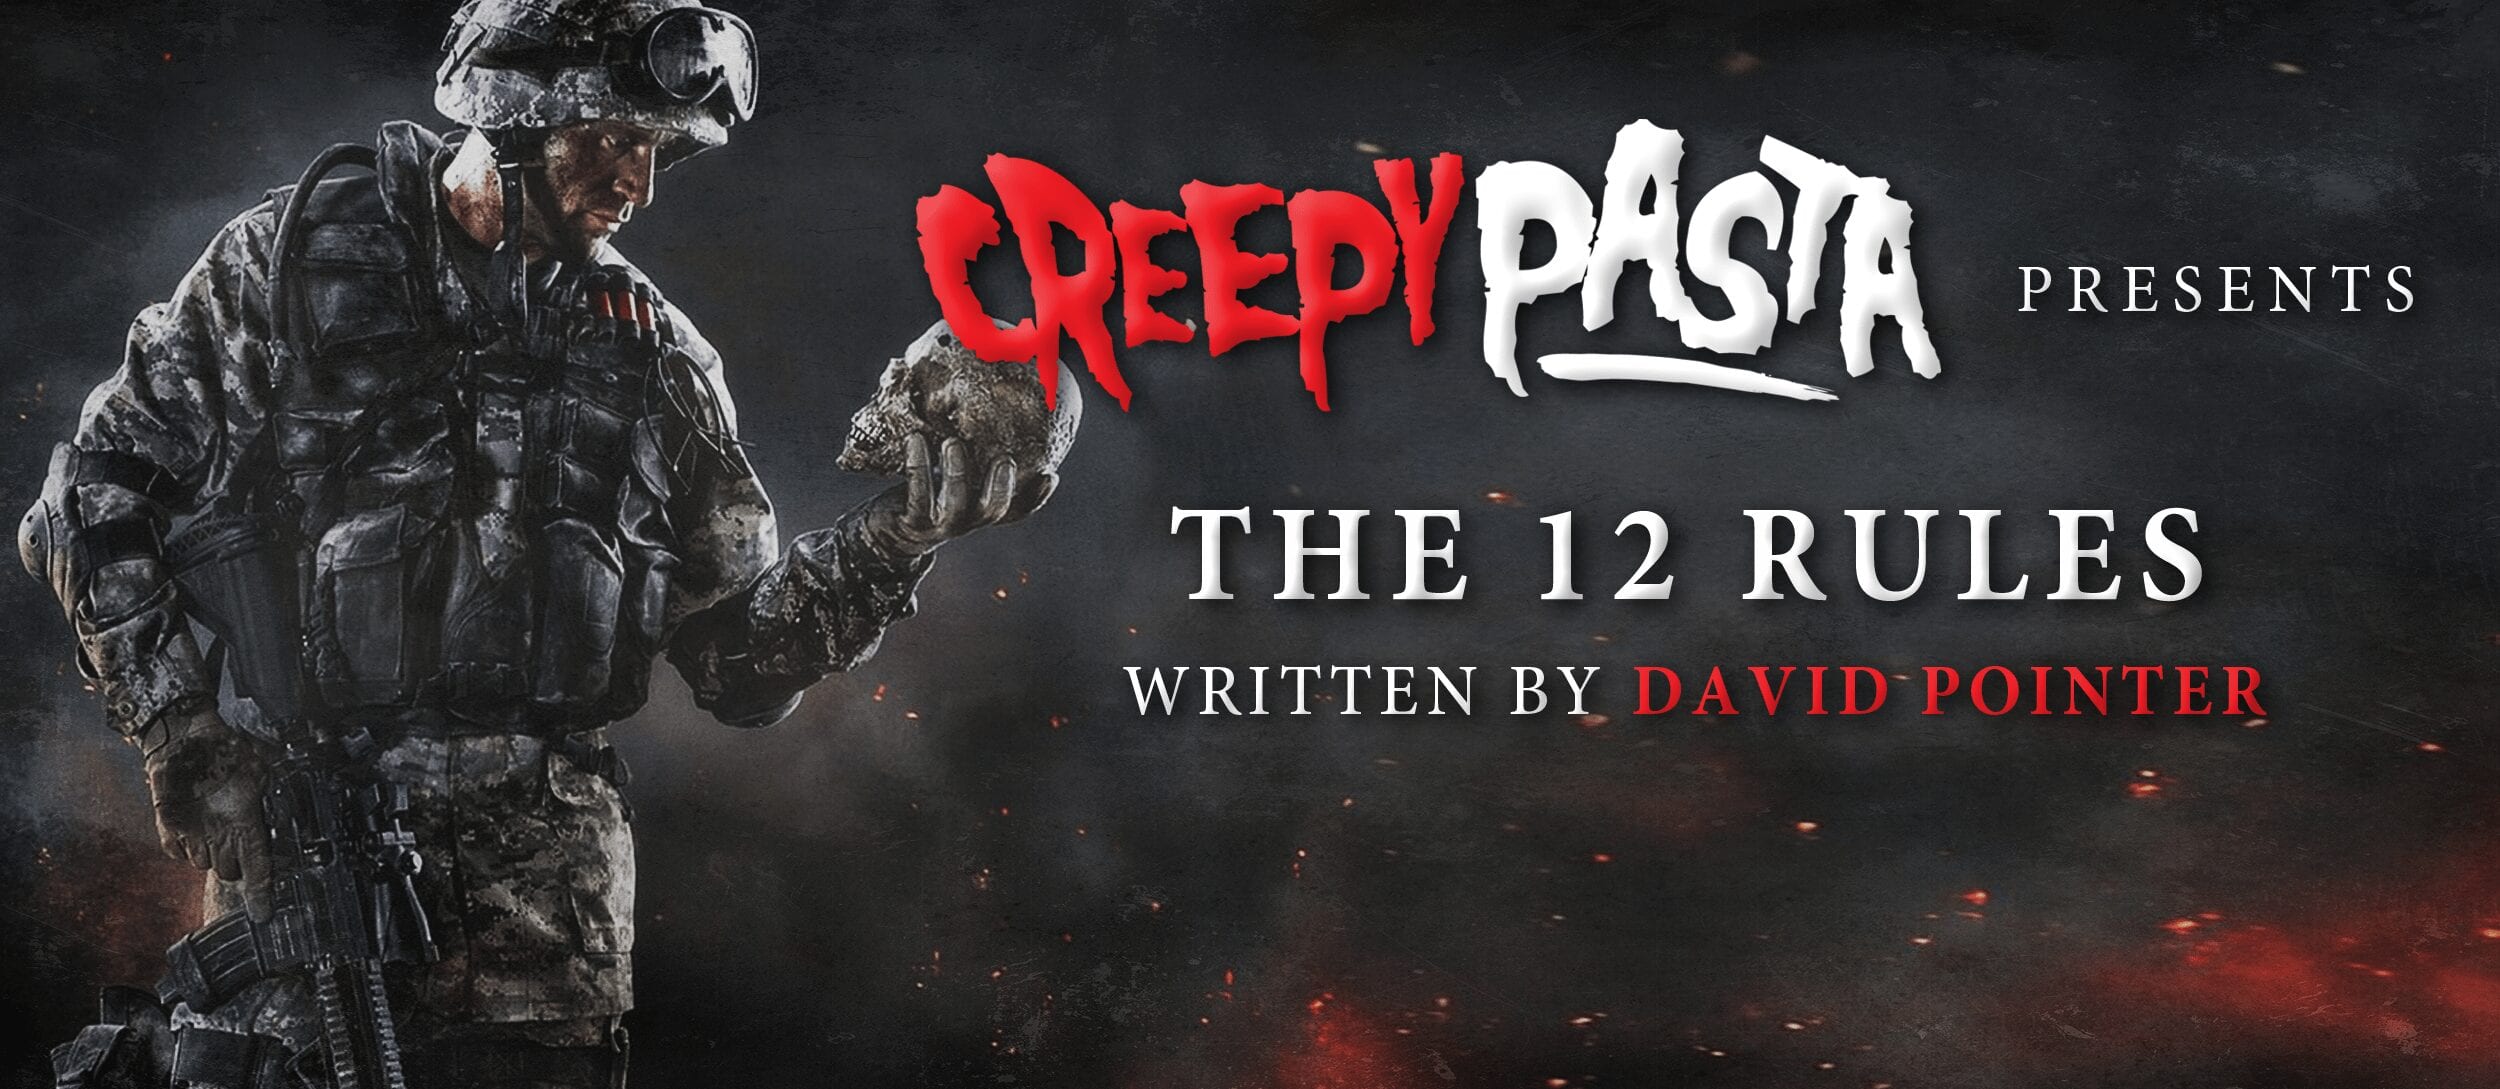 The 12 Rules - Creepypasta